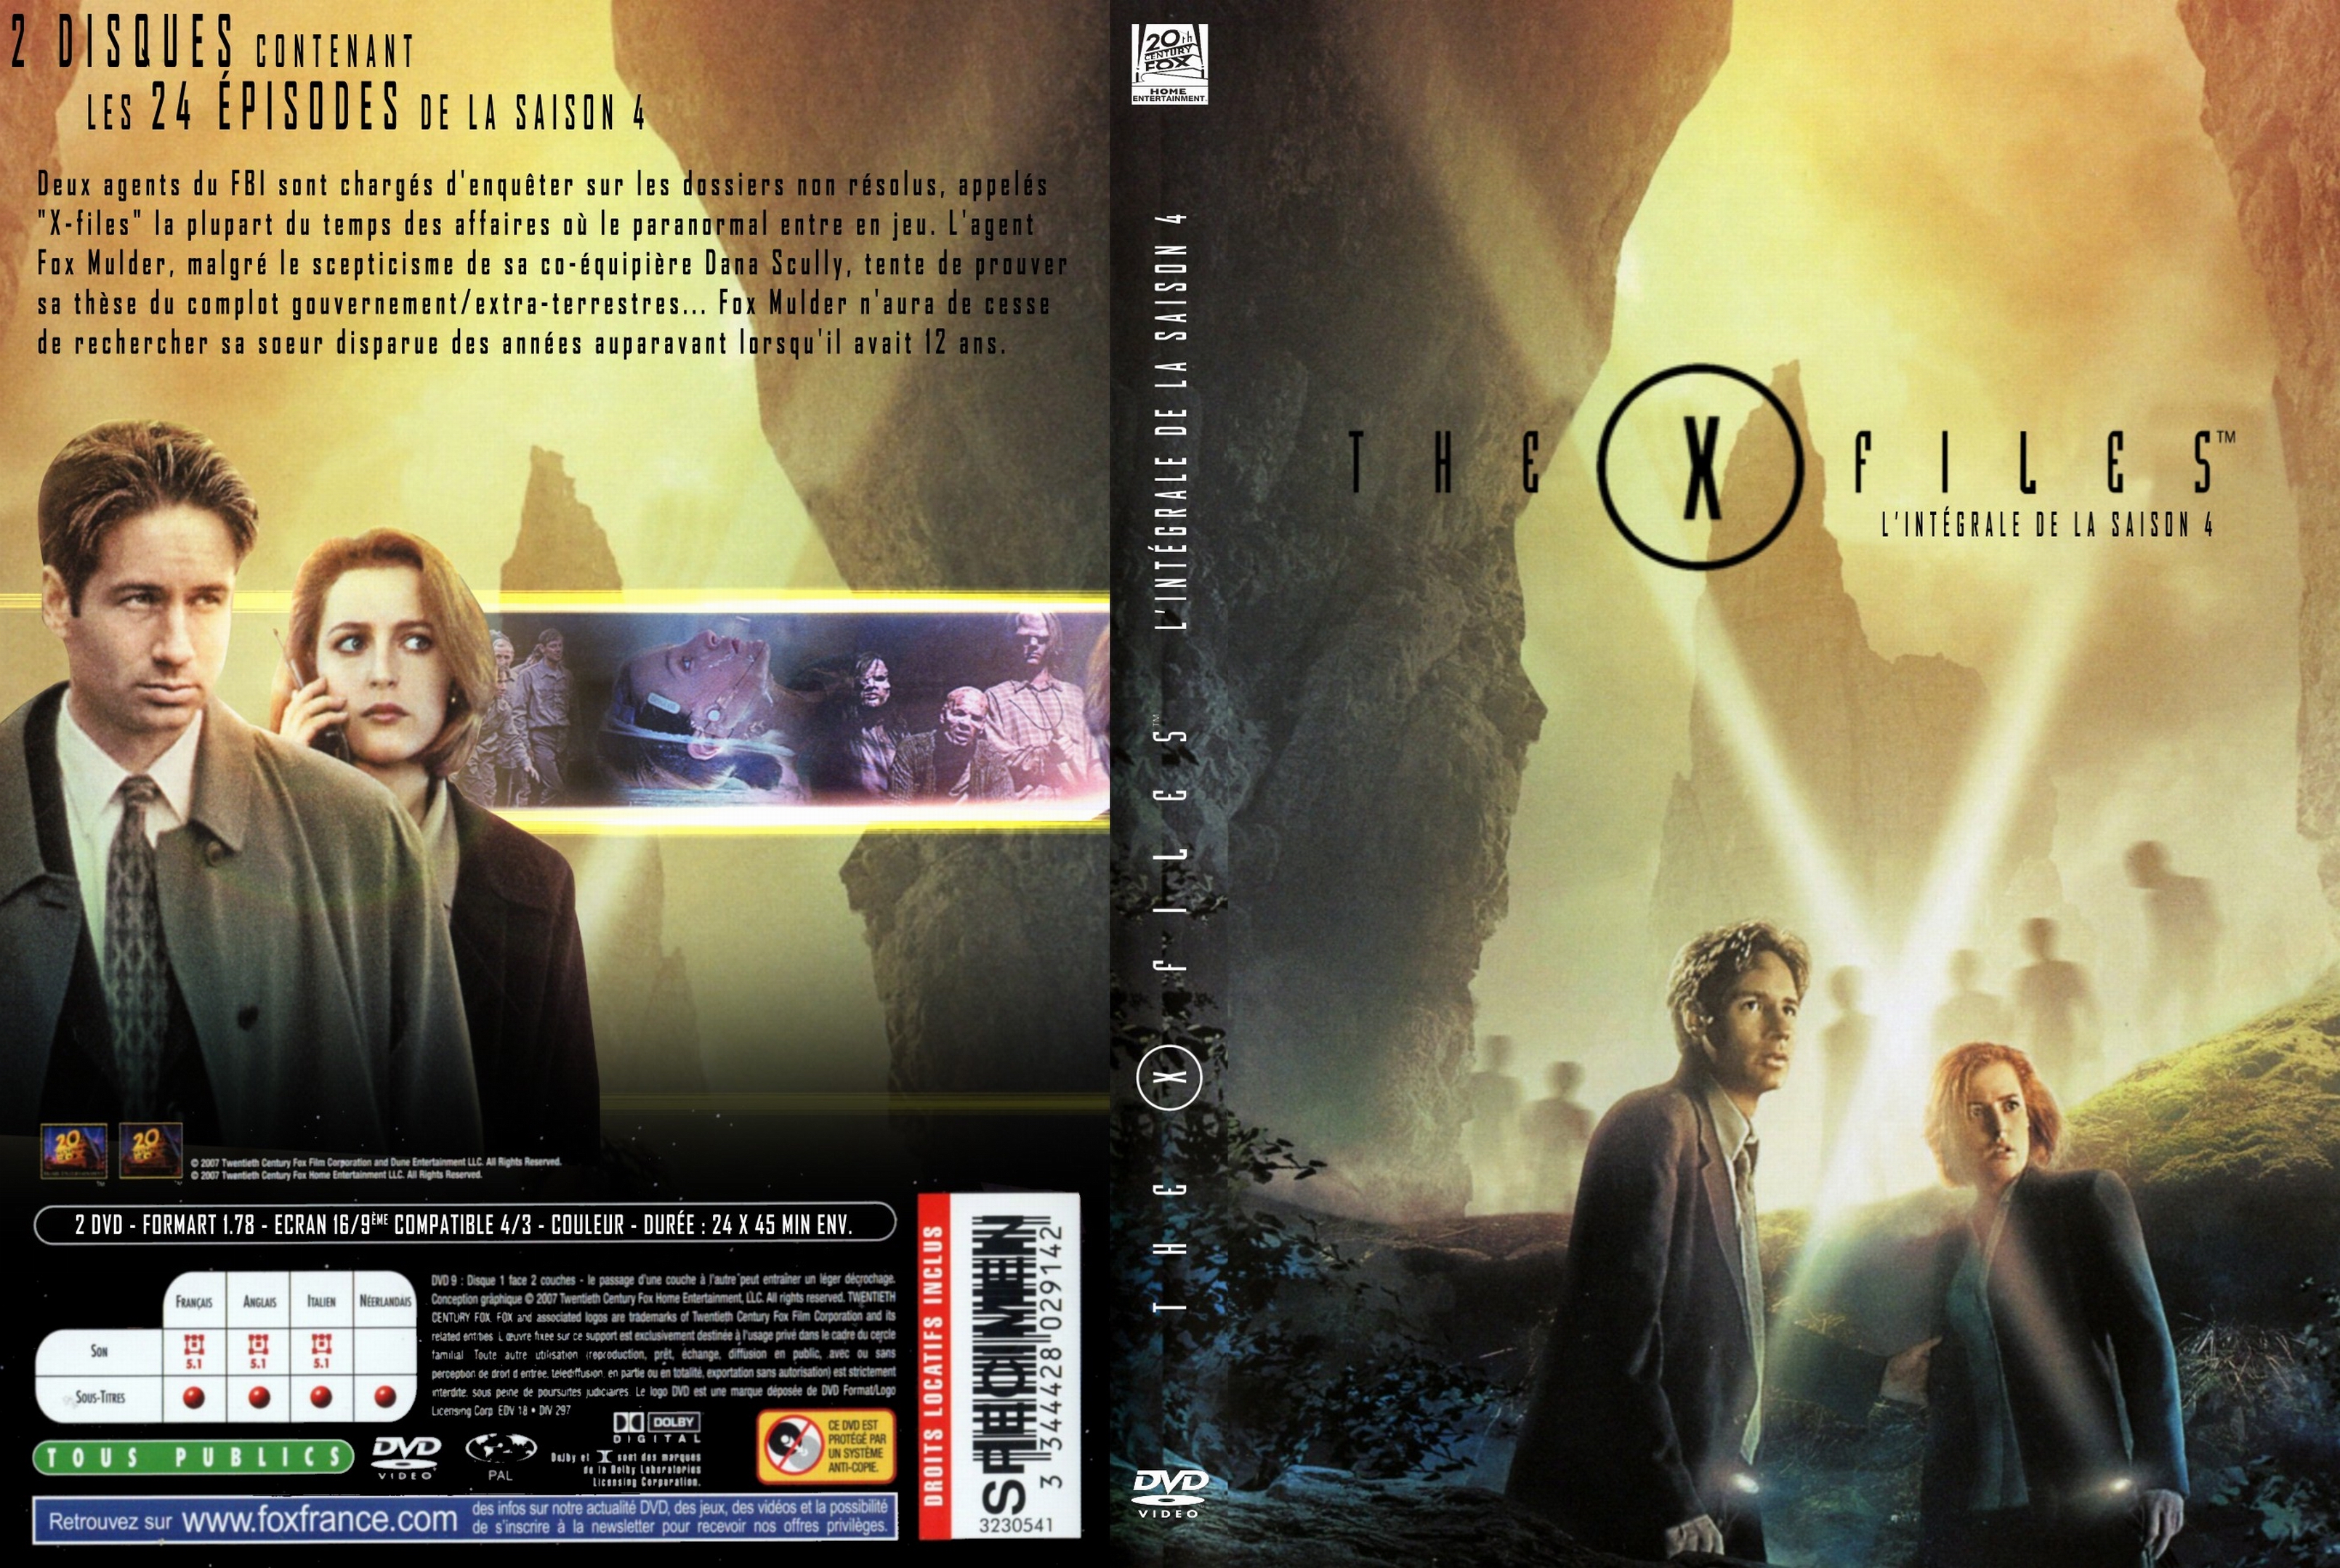 Jaquette DVD The X Files saison 4 custom